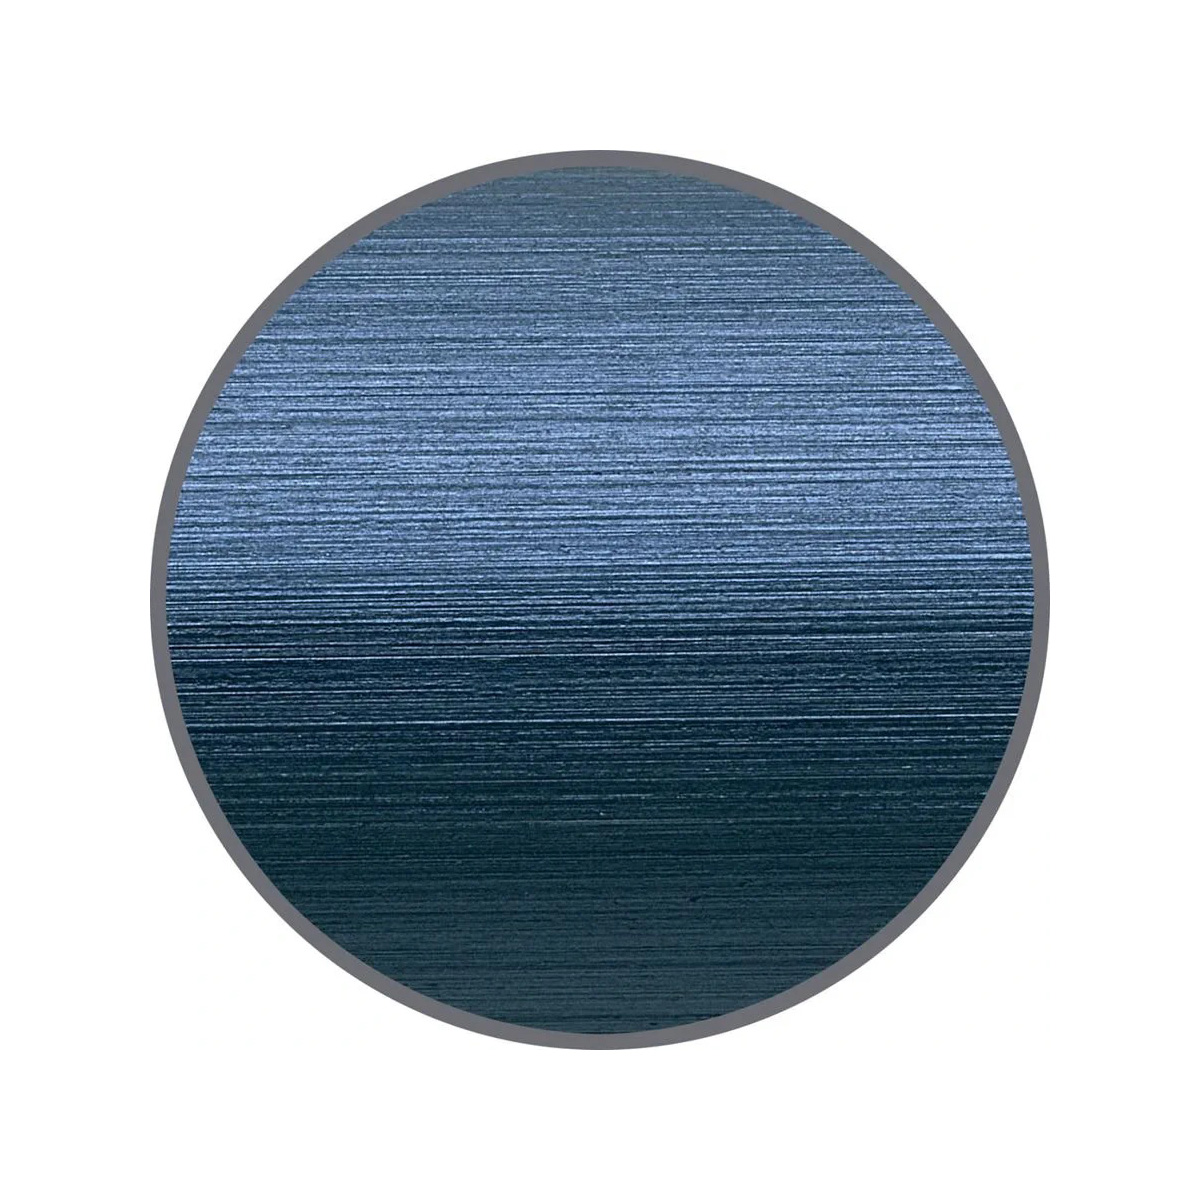 Faber Castell - Neo Slim - Penna a sfera - Aluminium Dark Blue